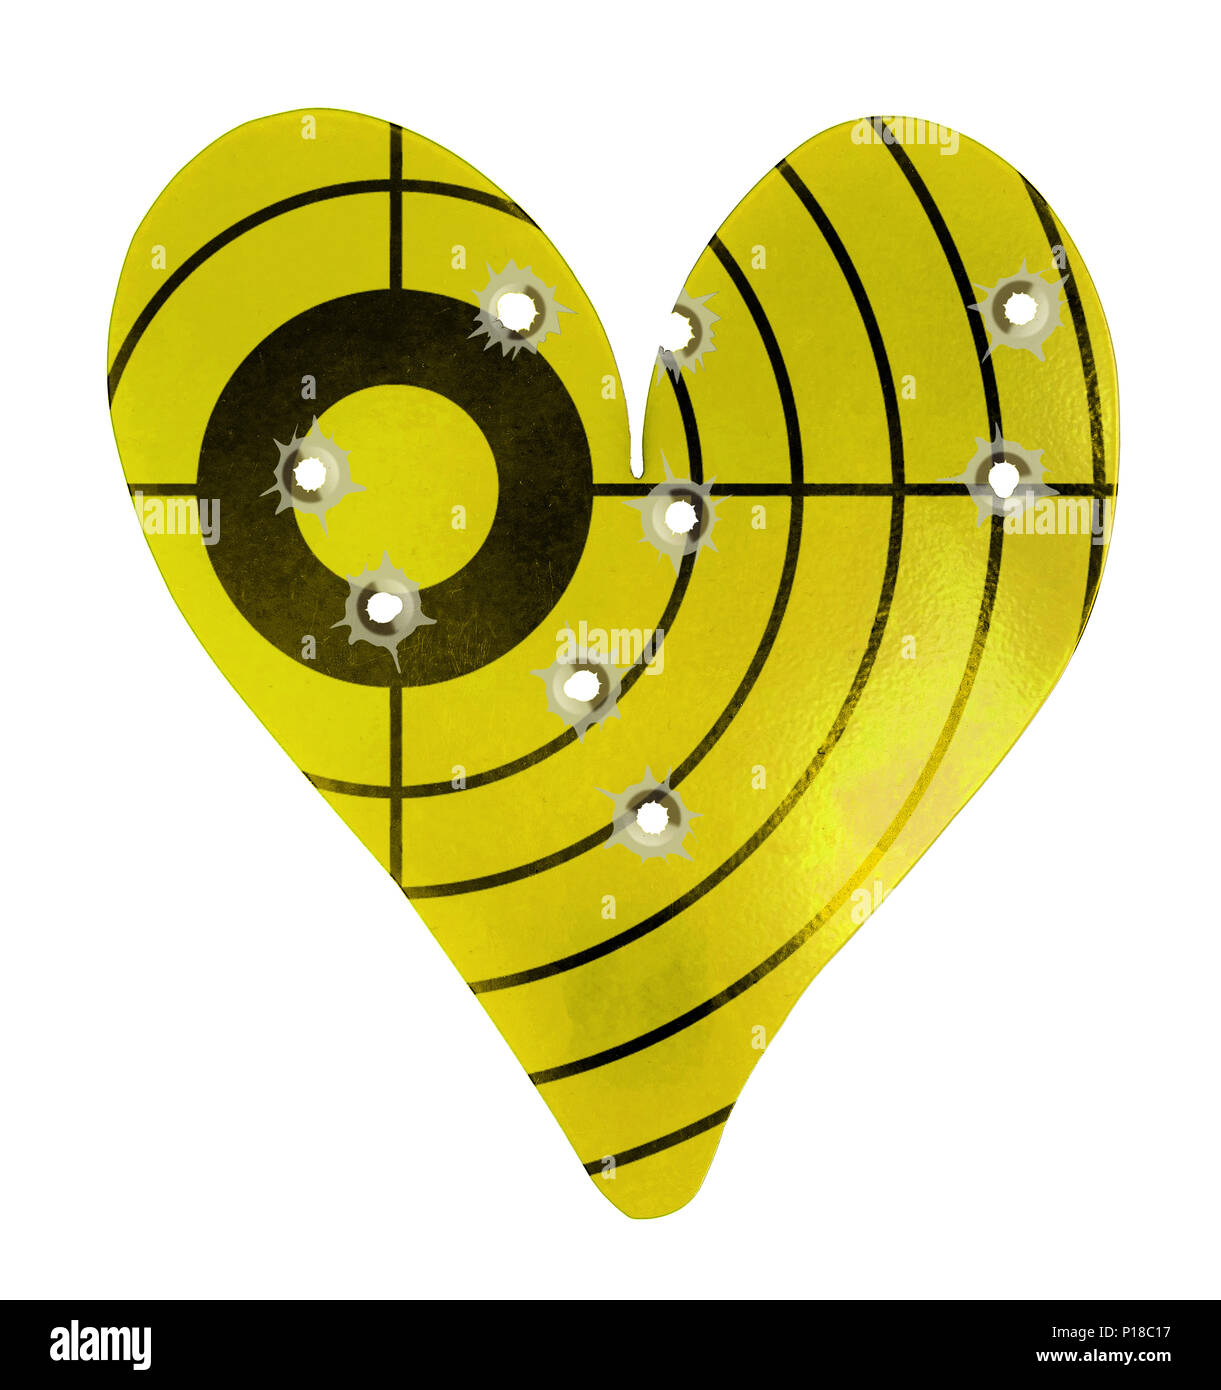 Bulletholes in einem Metal Heart-shaped Target - Jagd, Liebe  Stockfotografie - Alamy